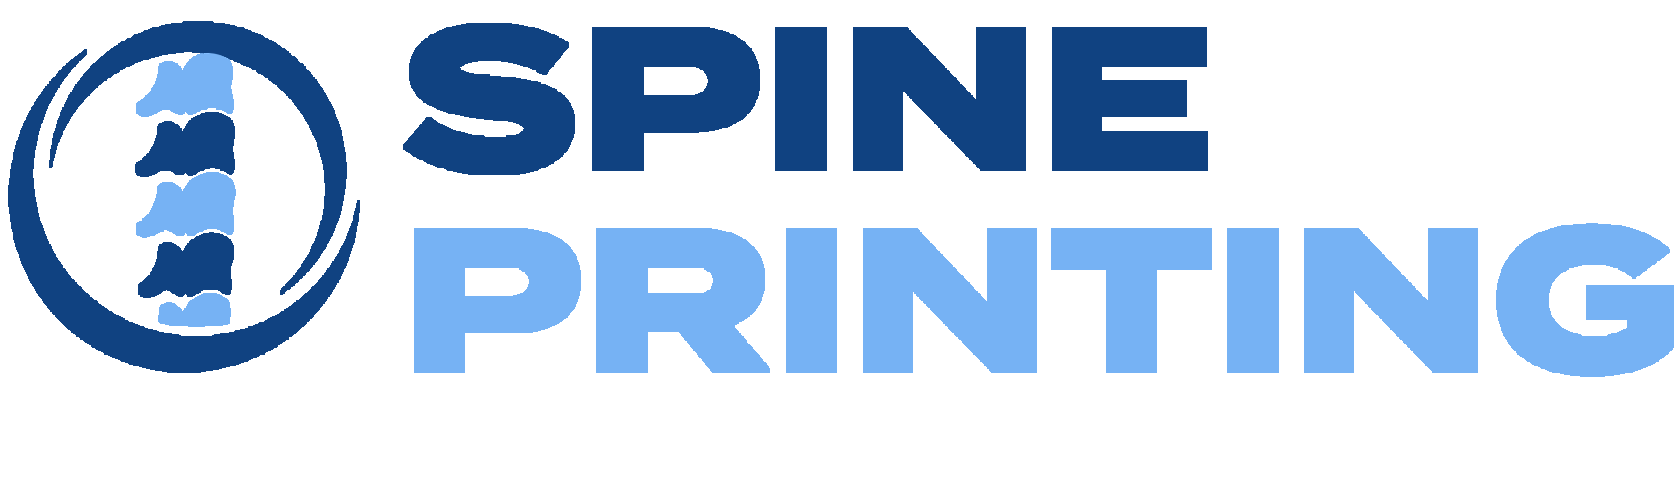 Spine Printing